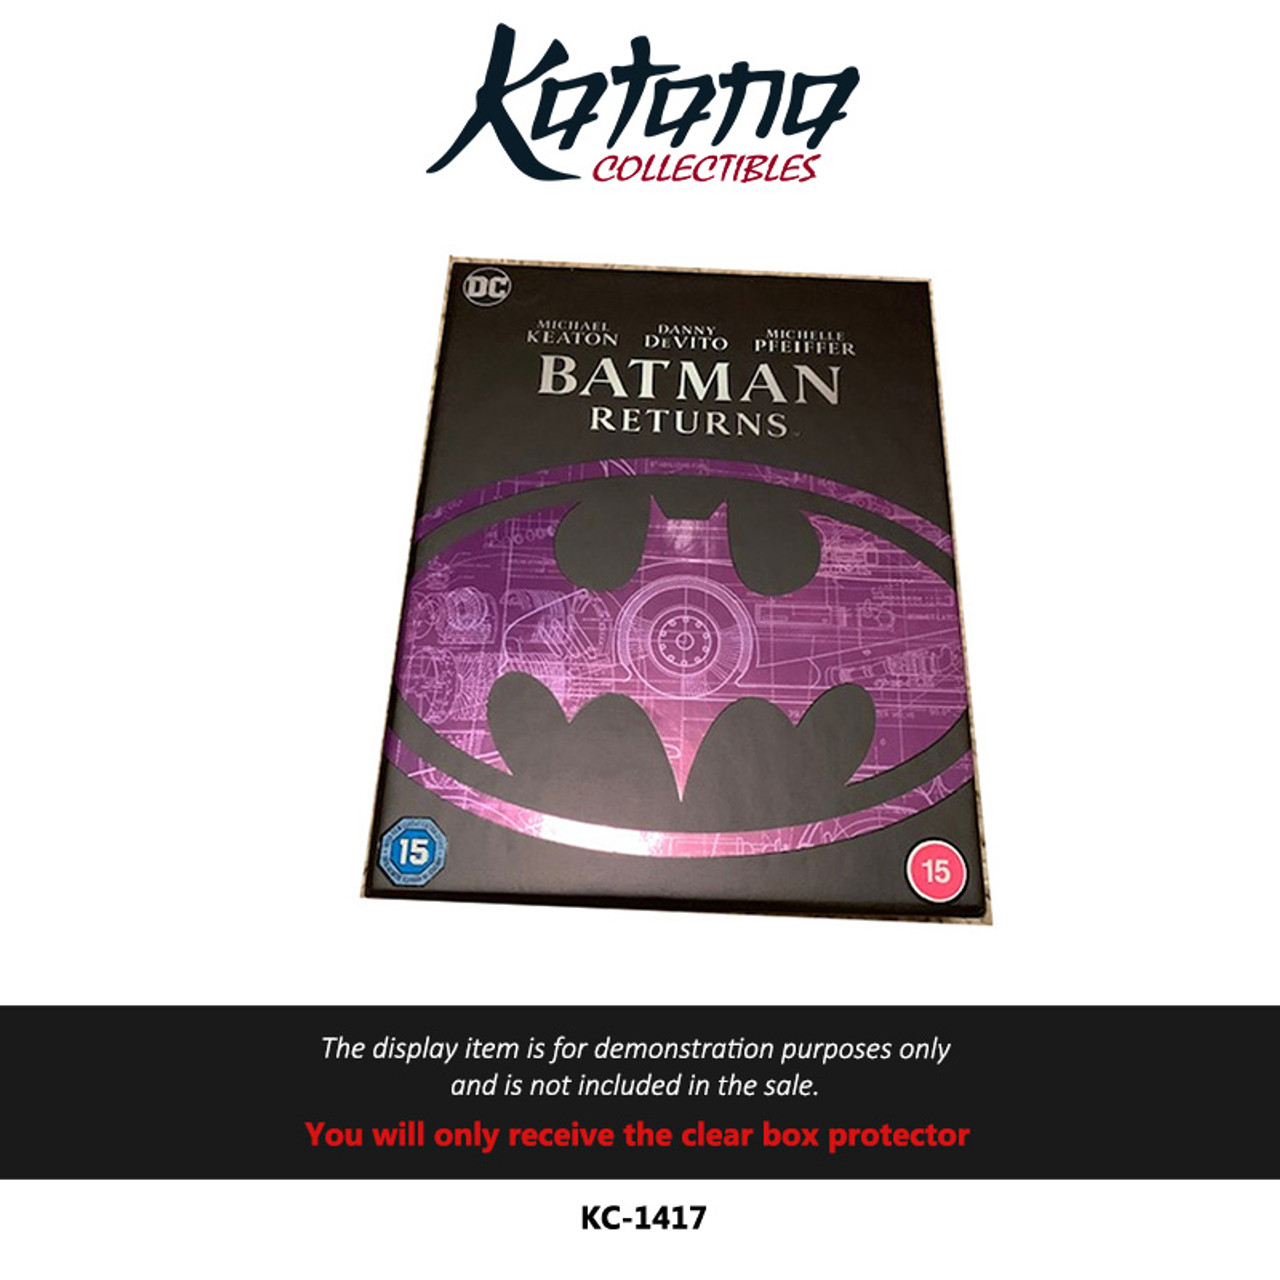 Katana Collectibles Protector For Batman Returns